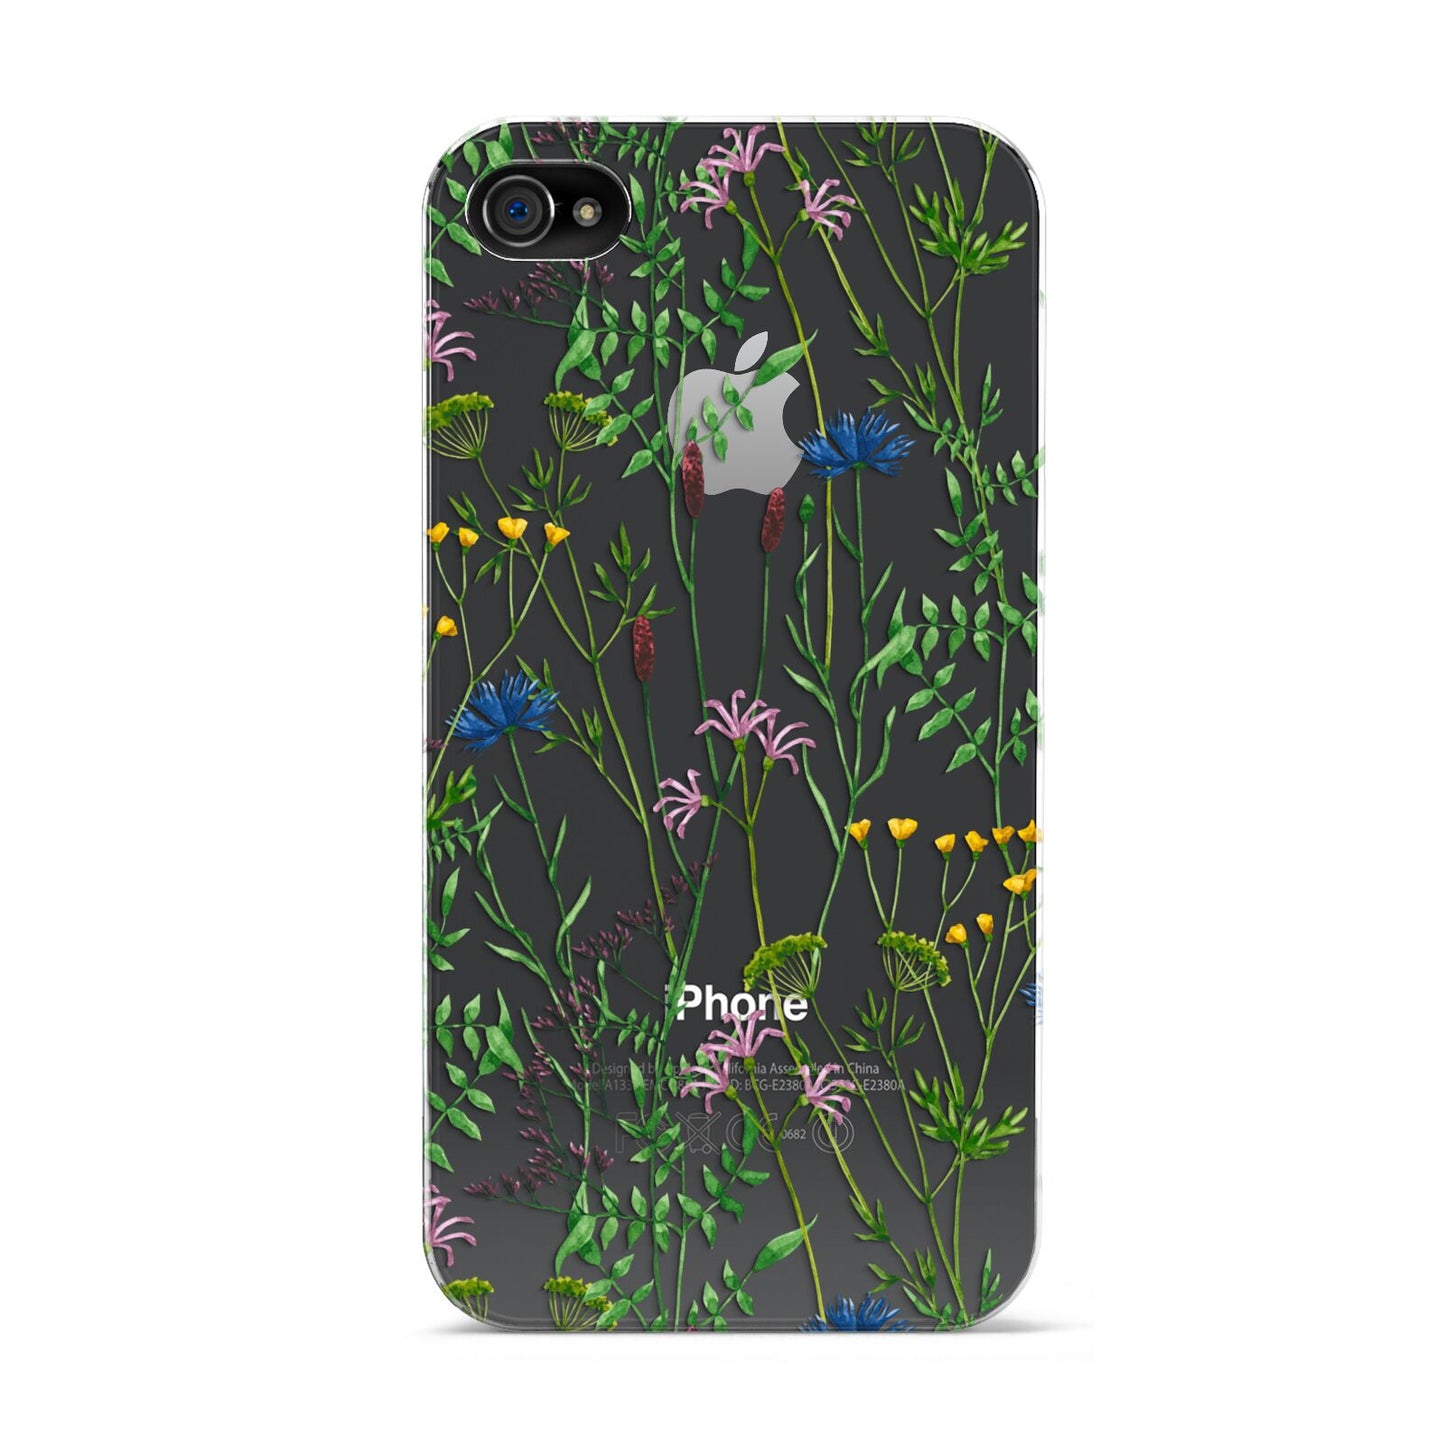 Wildflowers Apple iPhone 4s Case